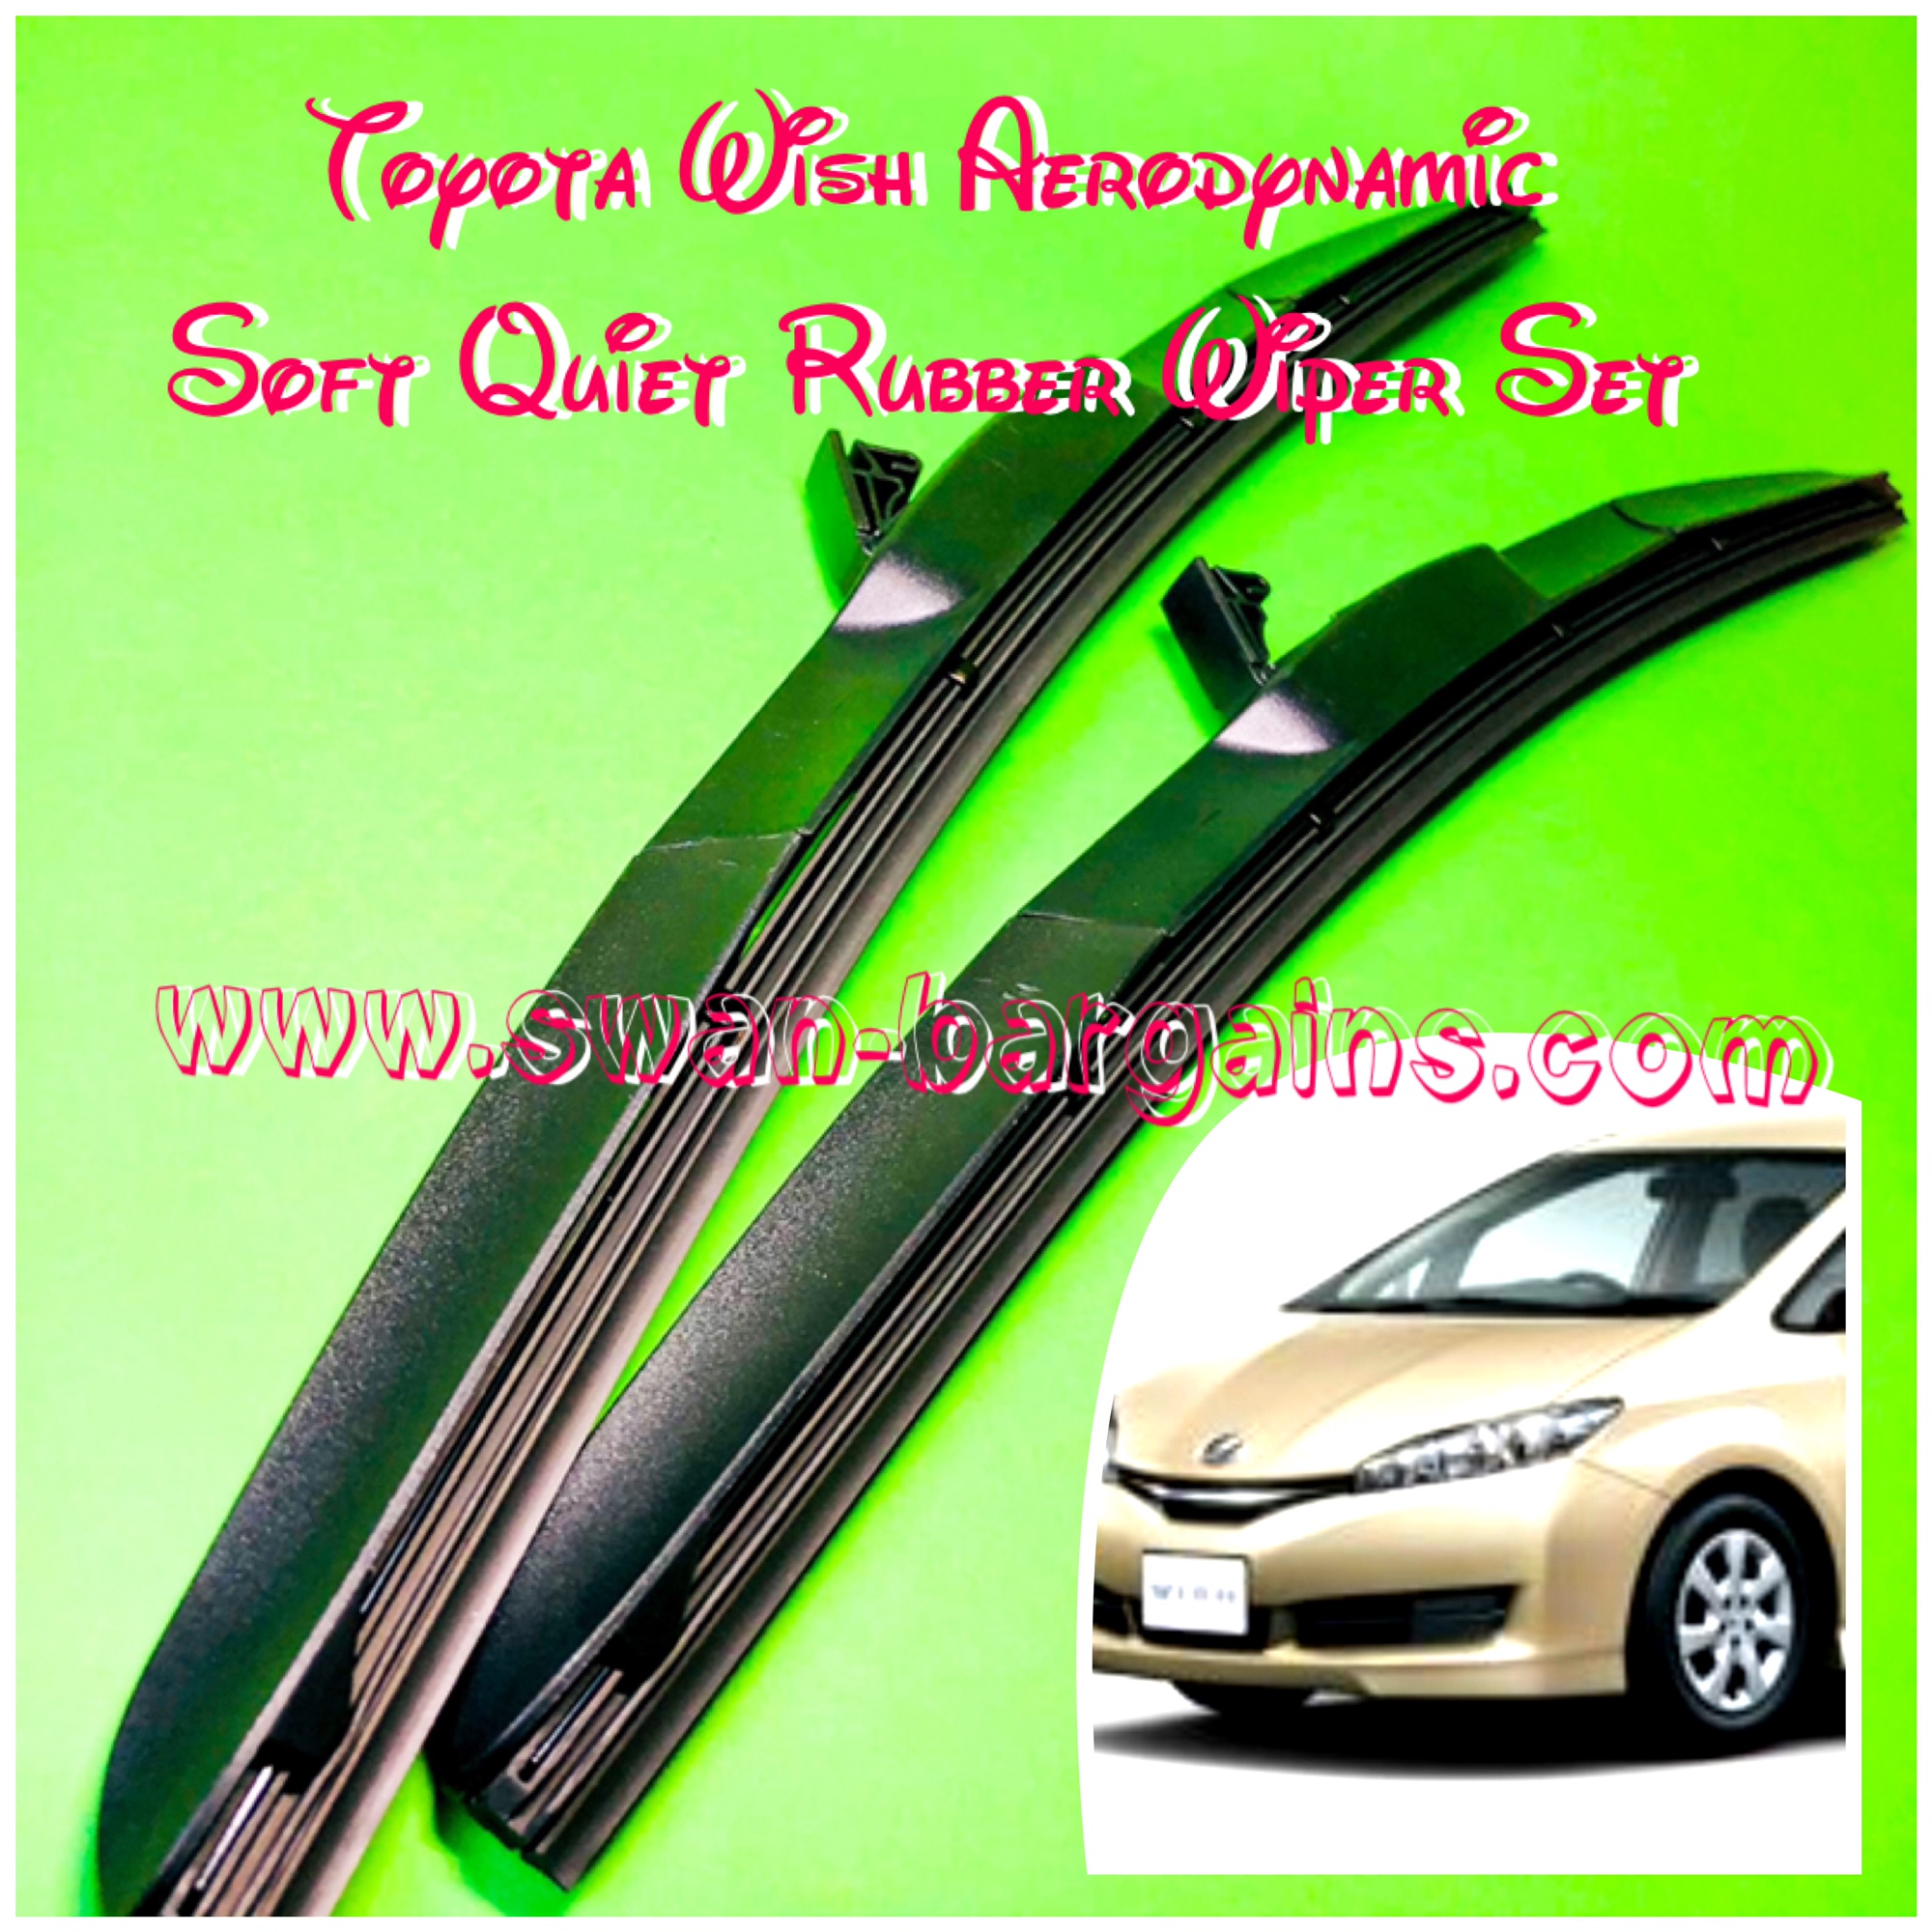 2pcs Toyota Wish Aerodynamic Quiet Wiper Blades Set Singapore